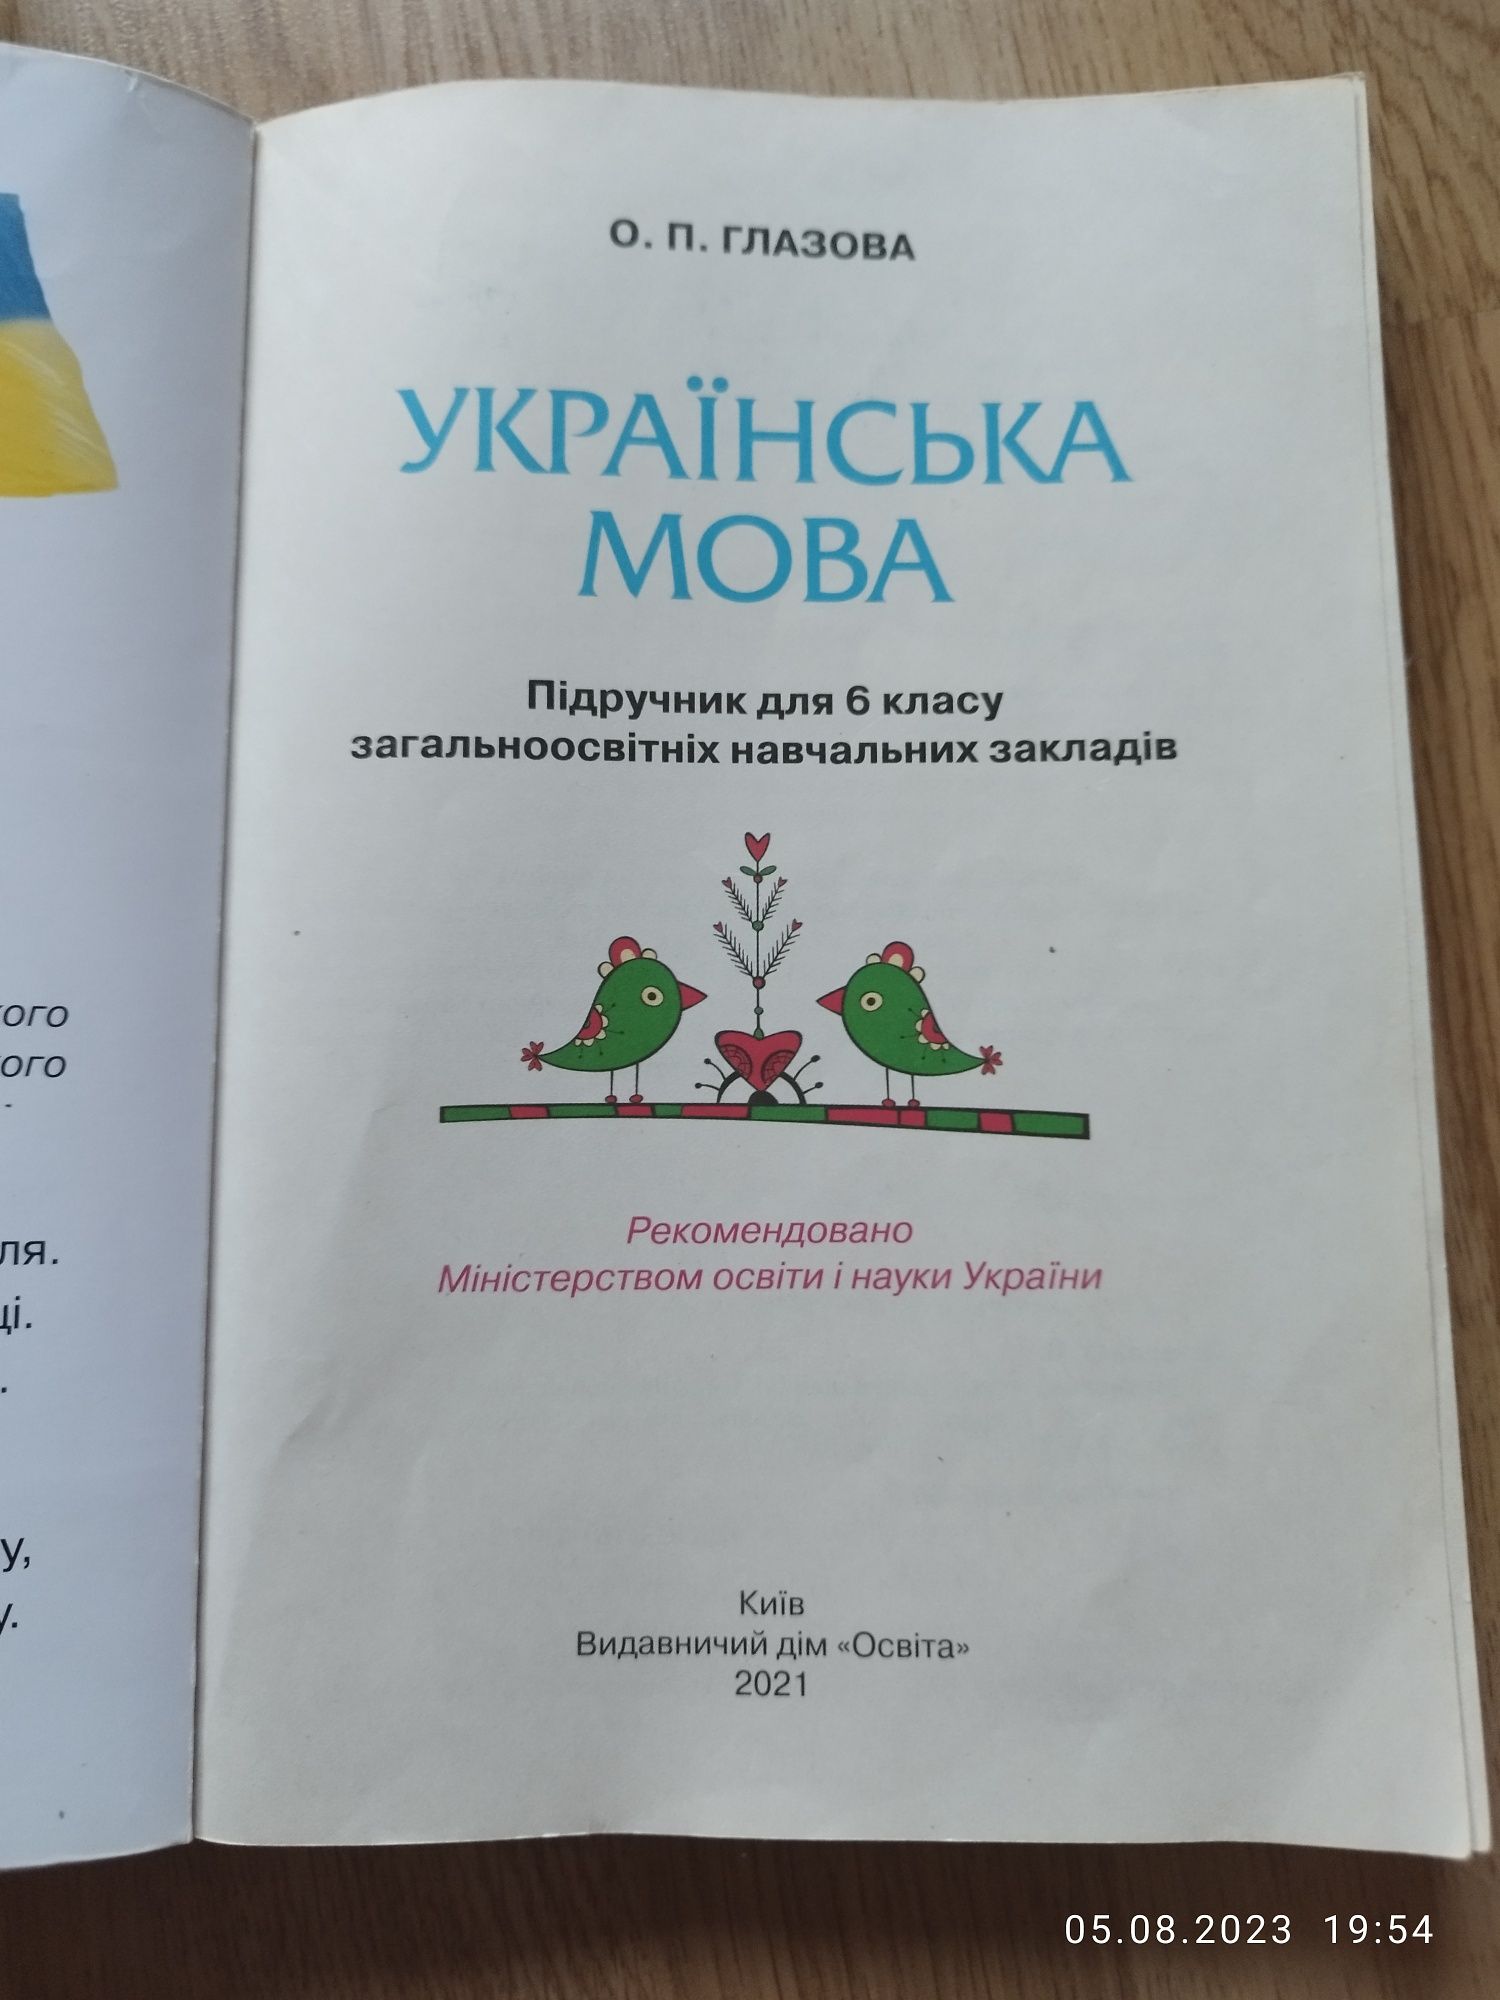 Книги математика, українська, 6 клас